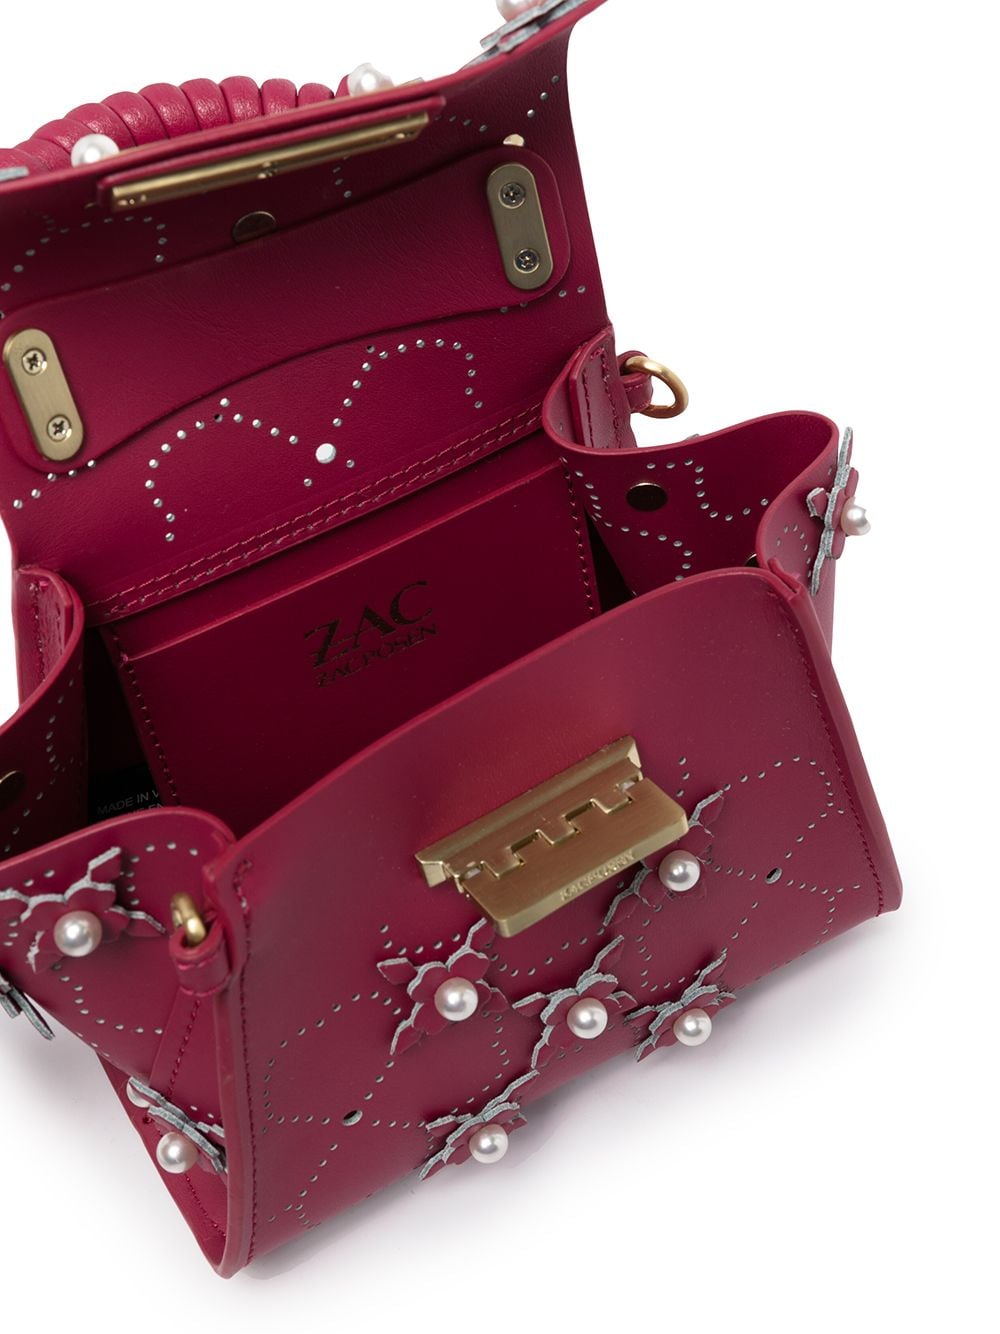 ZAC Zac Posen Eartha Floral Mini Top Handle Leather Satchel Bag